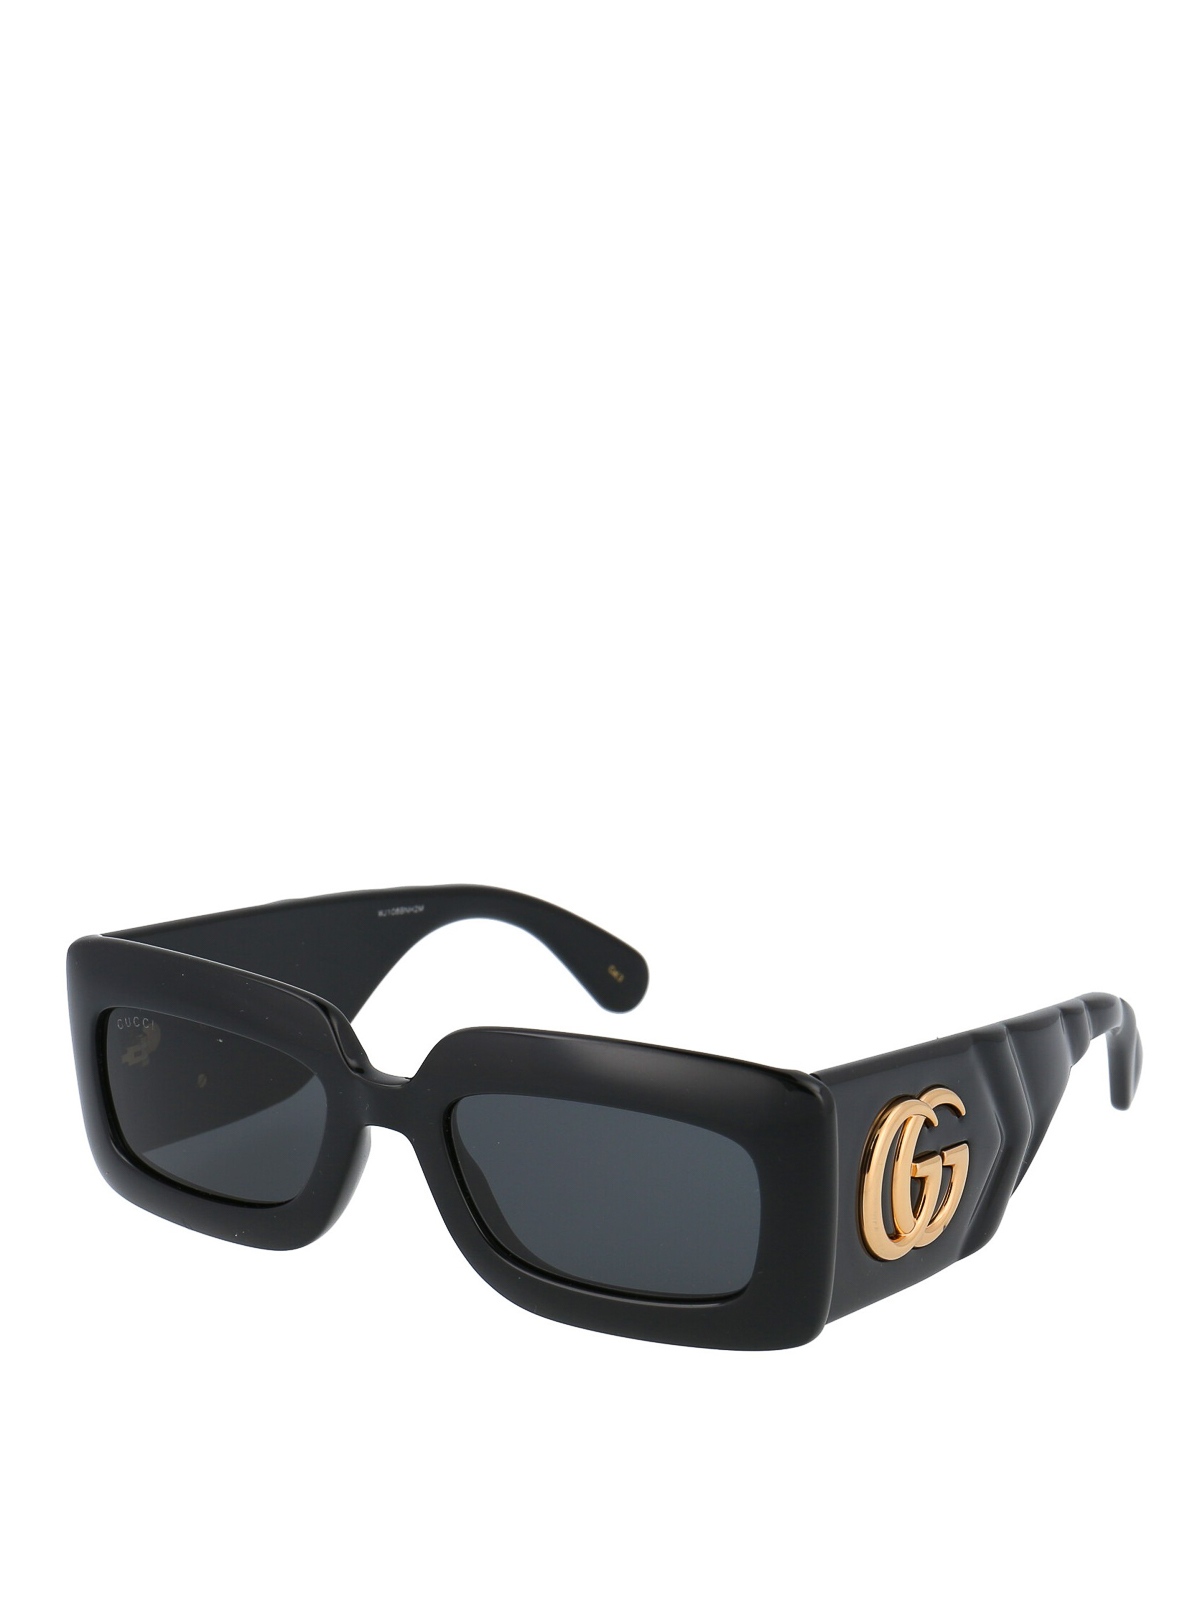 Ren Nedgang milits Sunglasses Gucci - Square sunglasses - GG0811S001 | Shop online at iKRIX